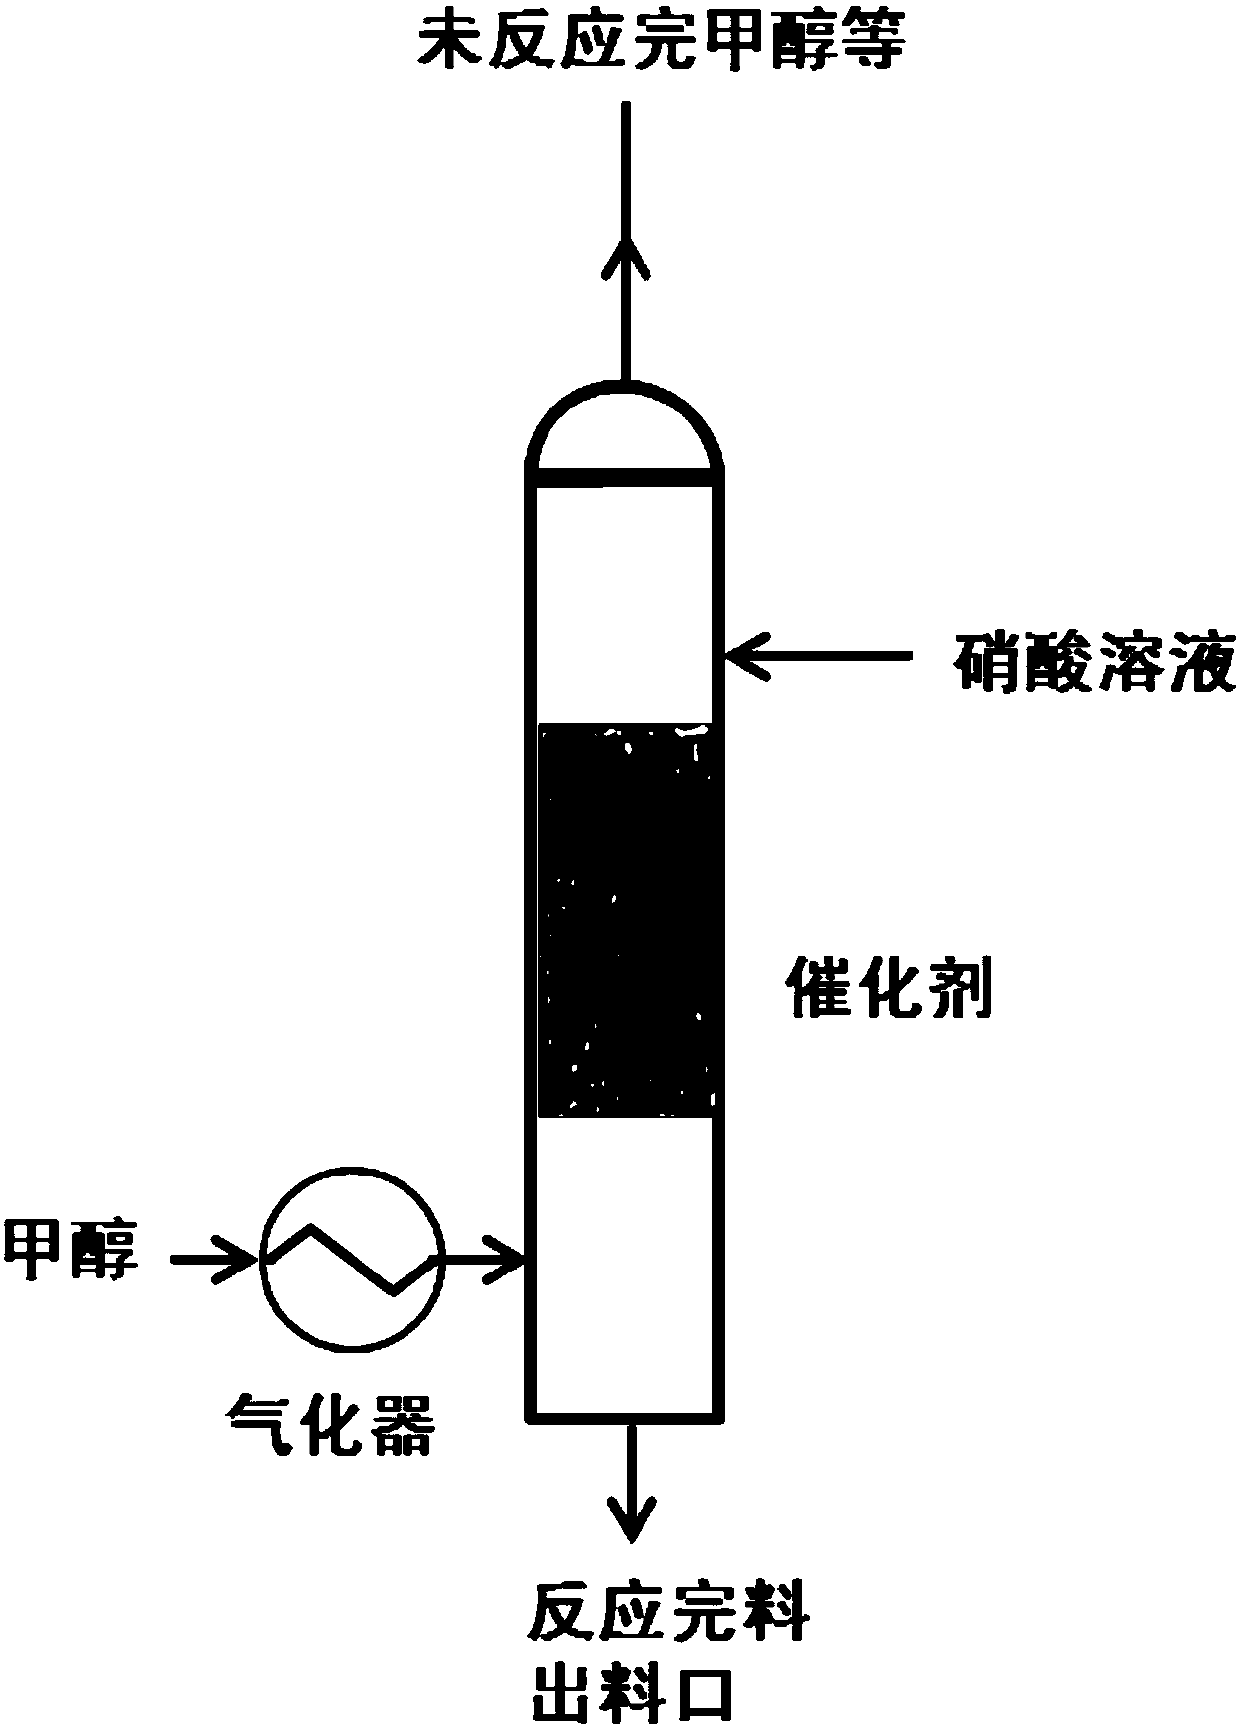 Method for preparing methyl nitrite through catalyzing dilute nitric acid